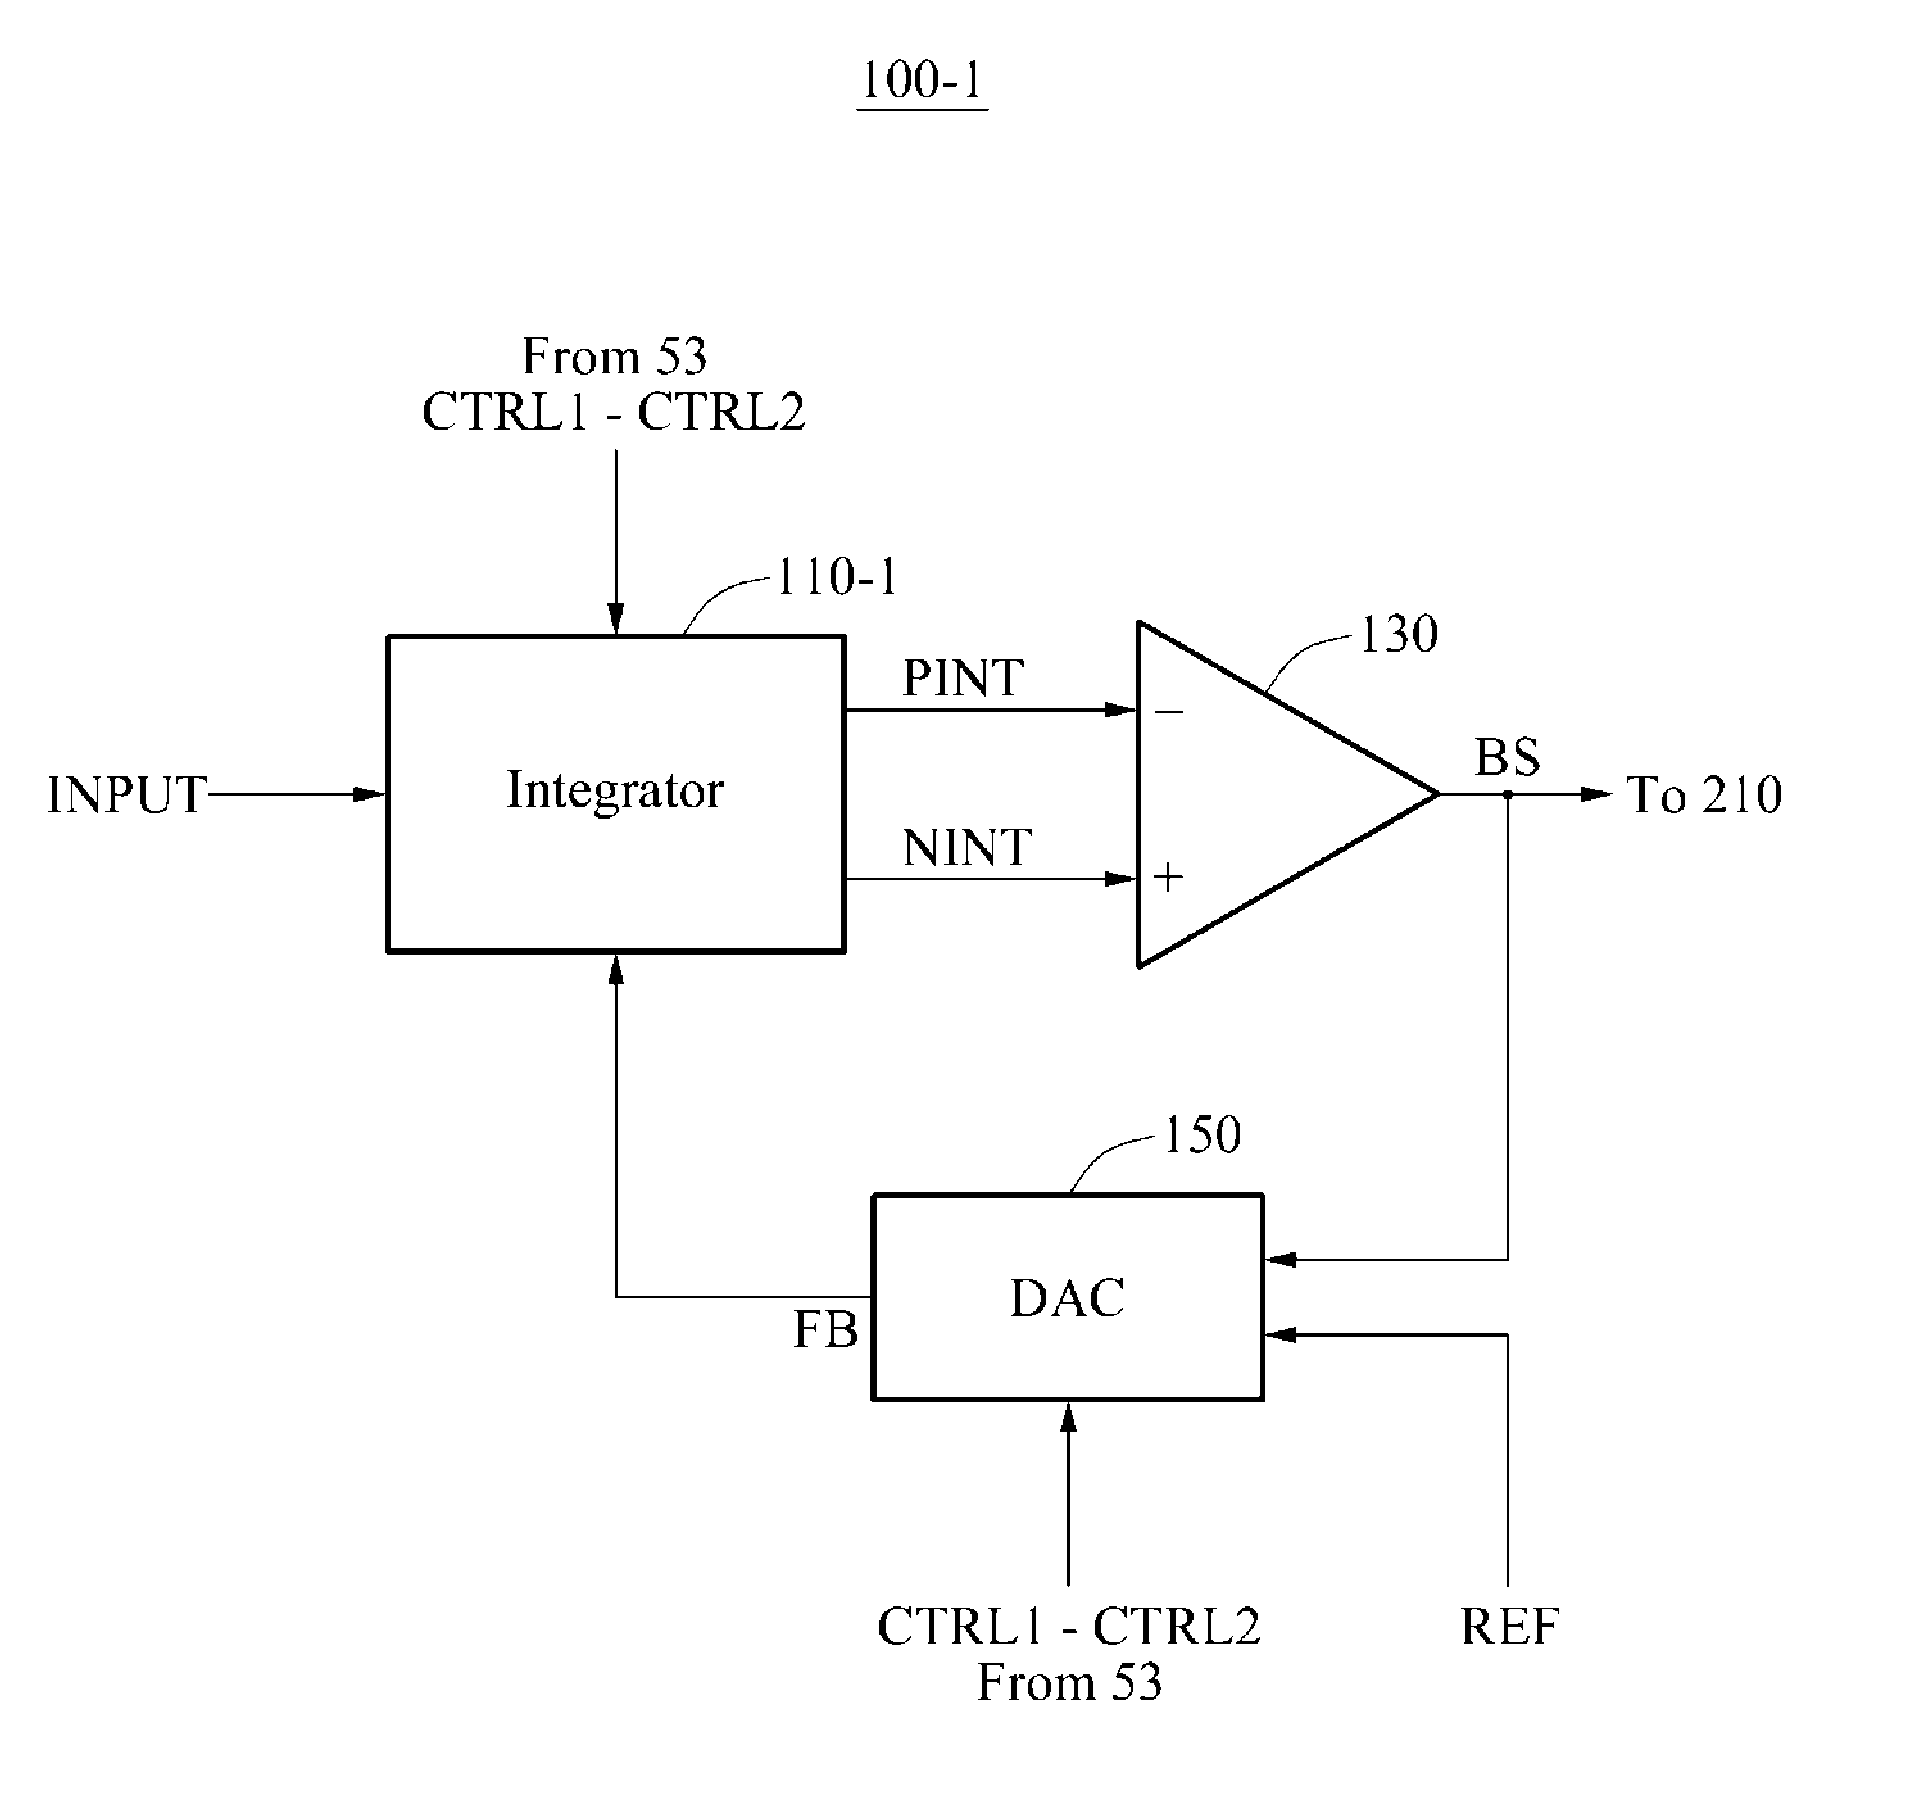 Delta-sigma modulator having differential output